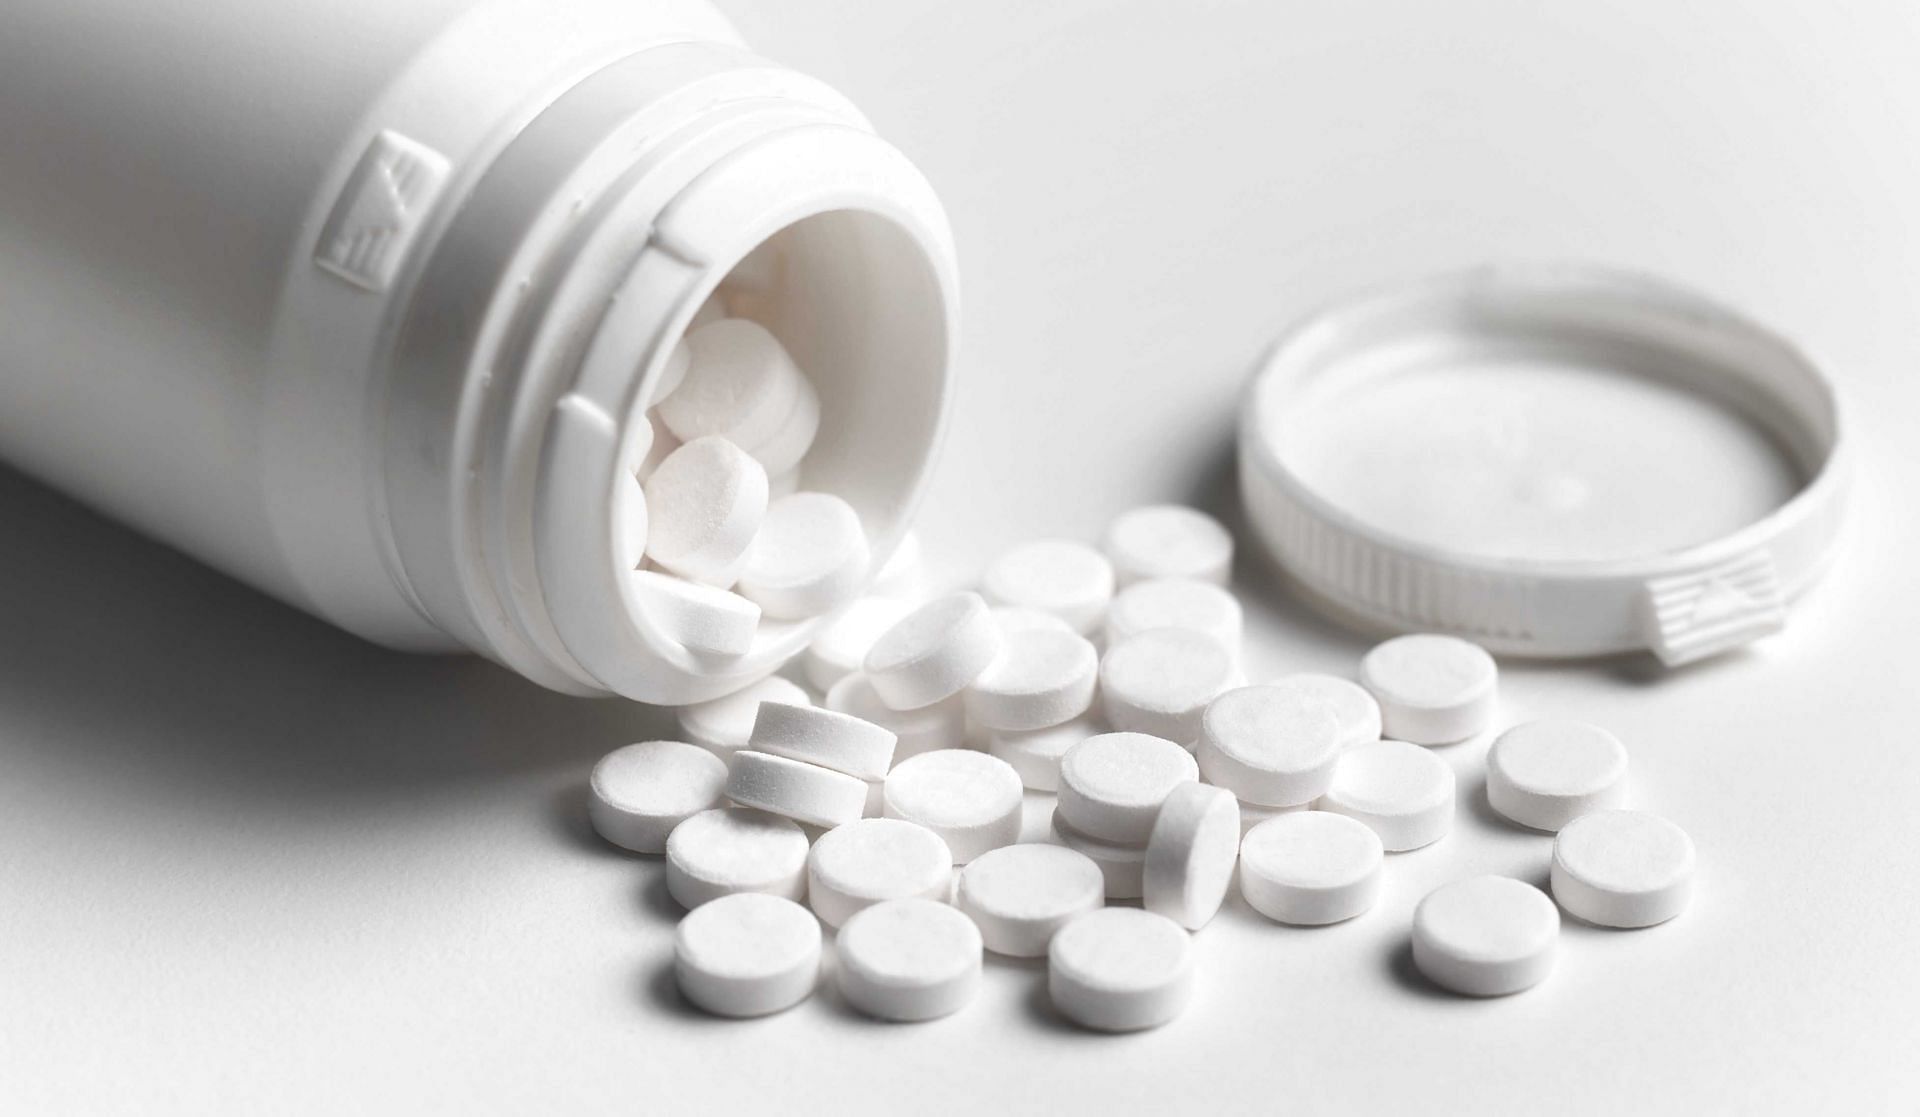 Pharmaceutical brands recall Aspirin, Ibuprofen; 400,000 bottles pose a child safety risk. (Image via Peter Dazeley/Getty Images)